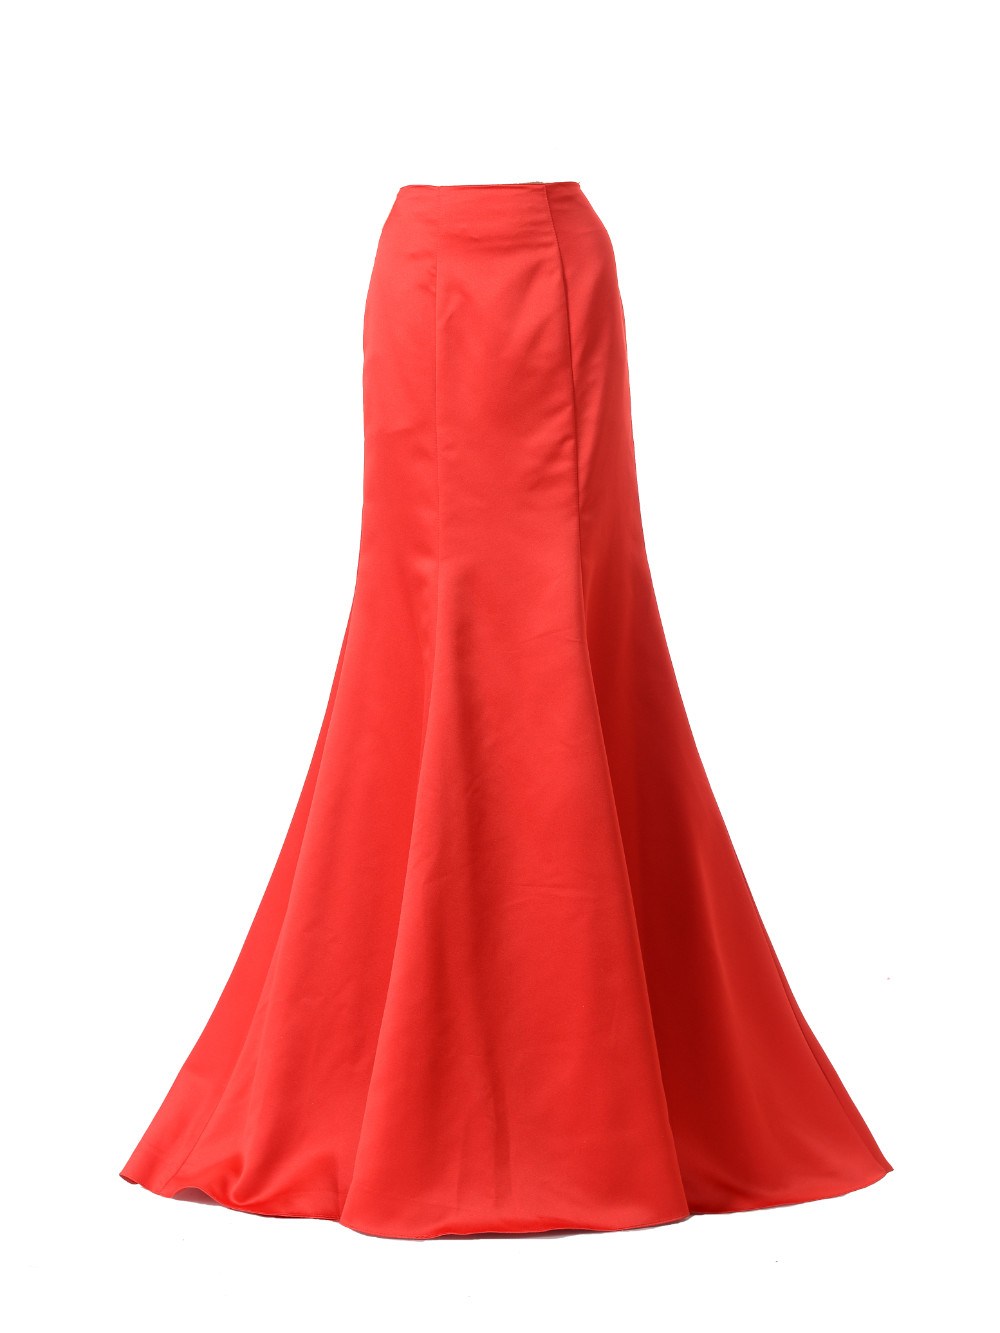 Poly USA SK18 - Red Mermaid Skirt Satin Ruffled Back 